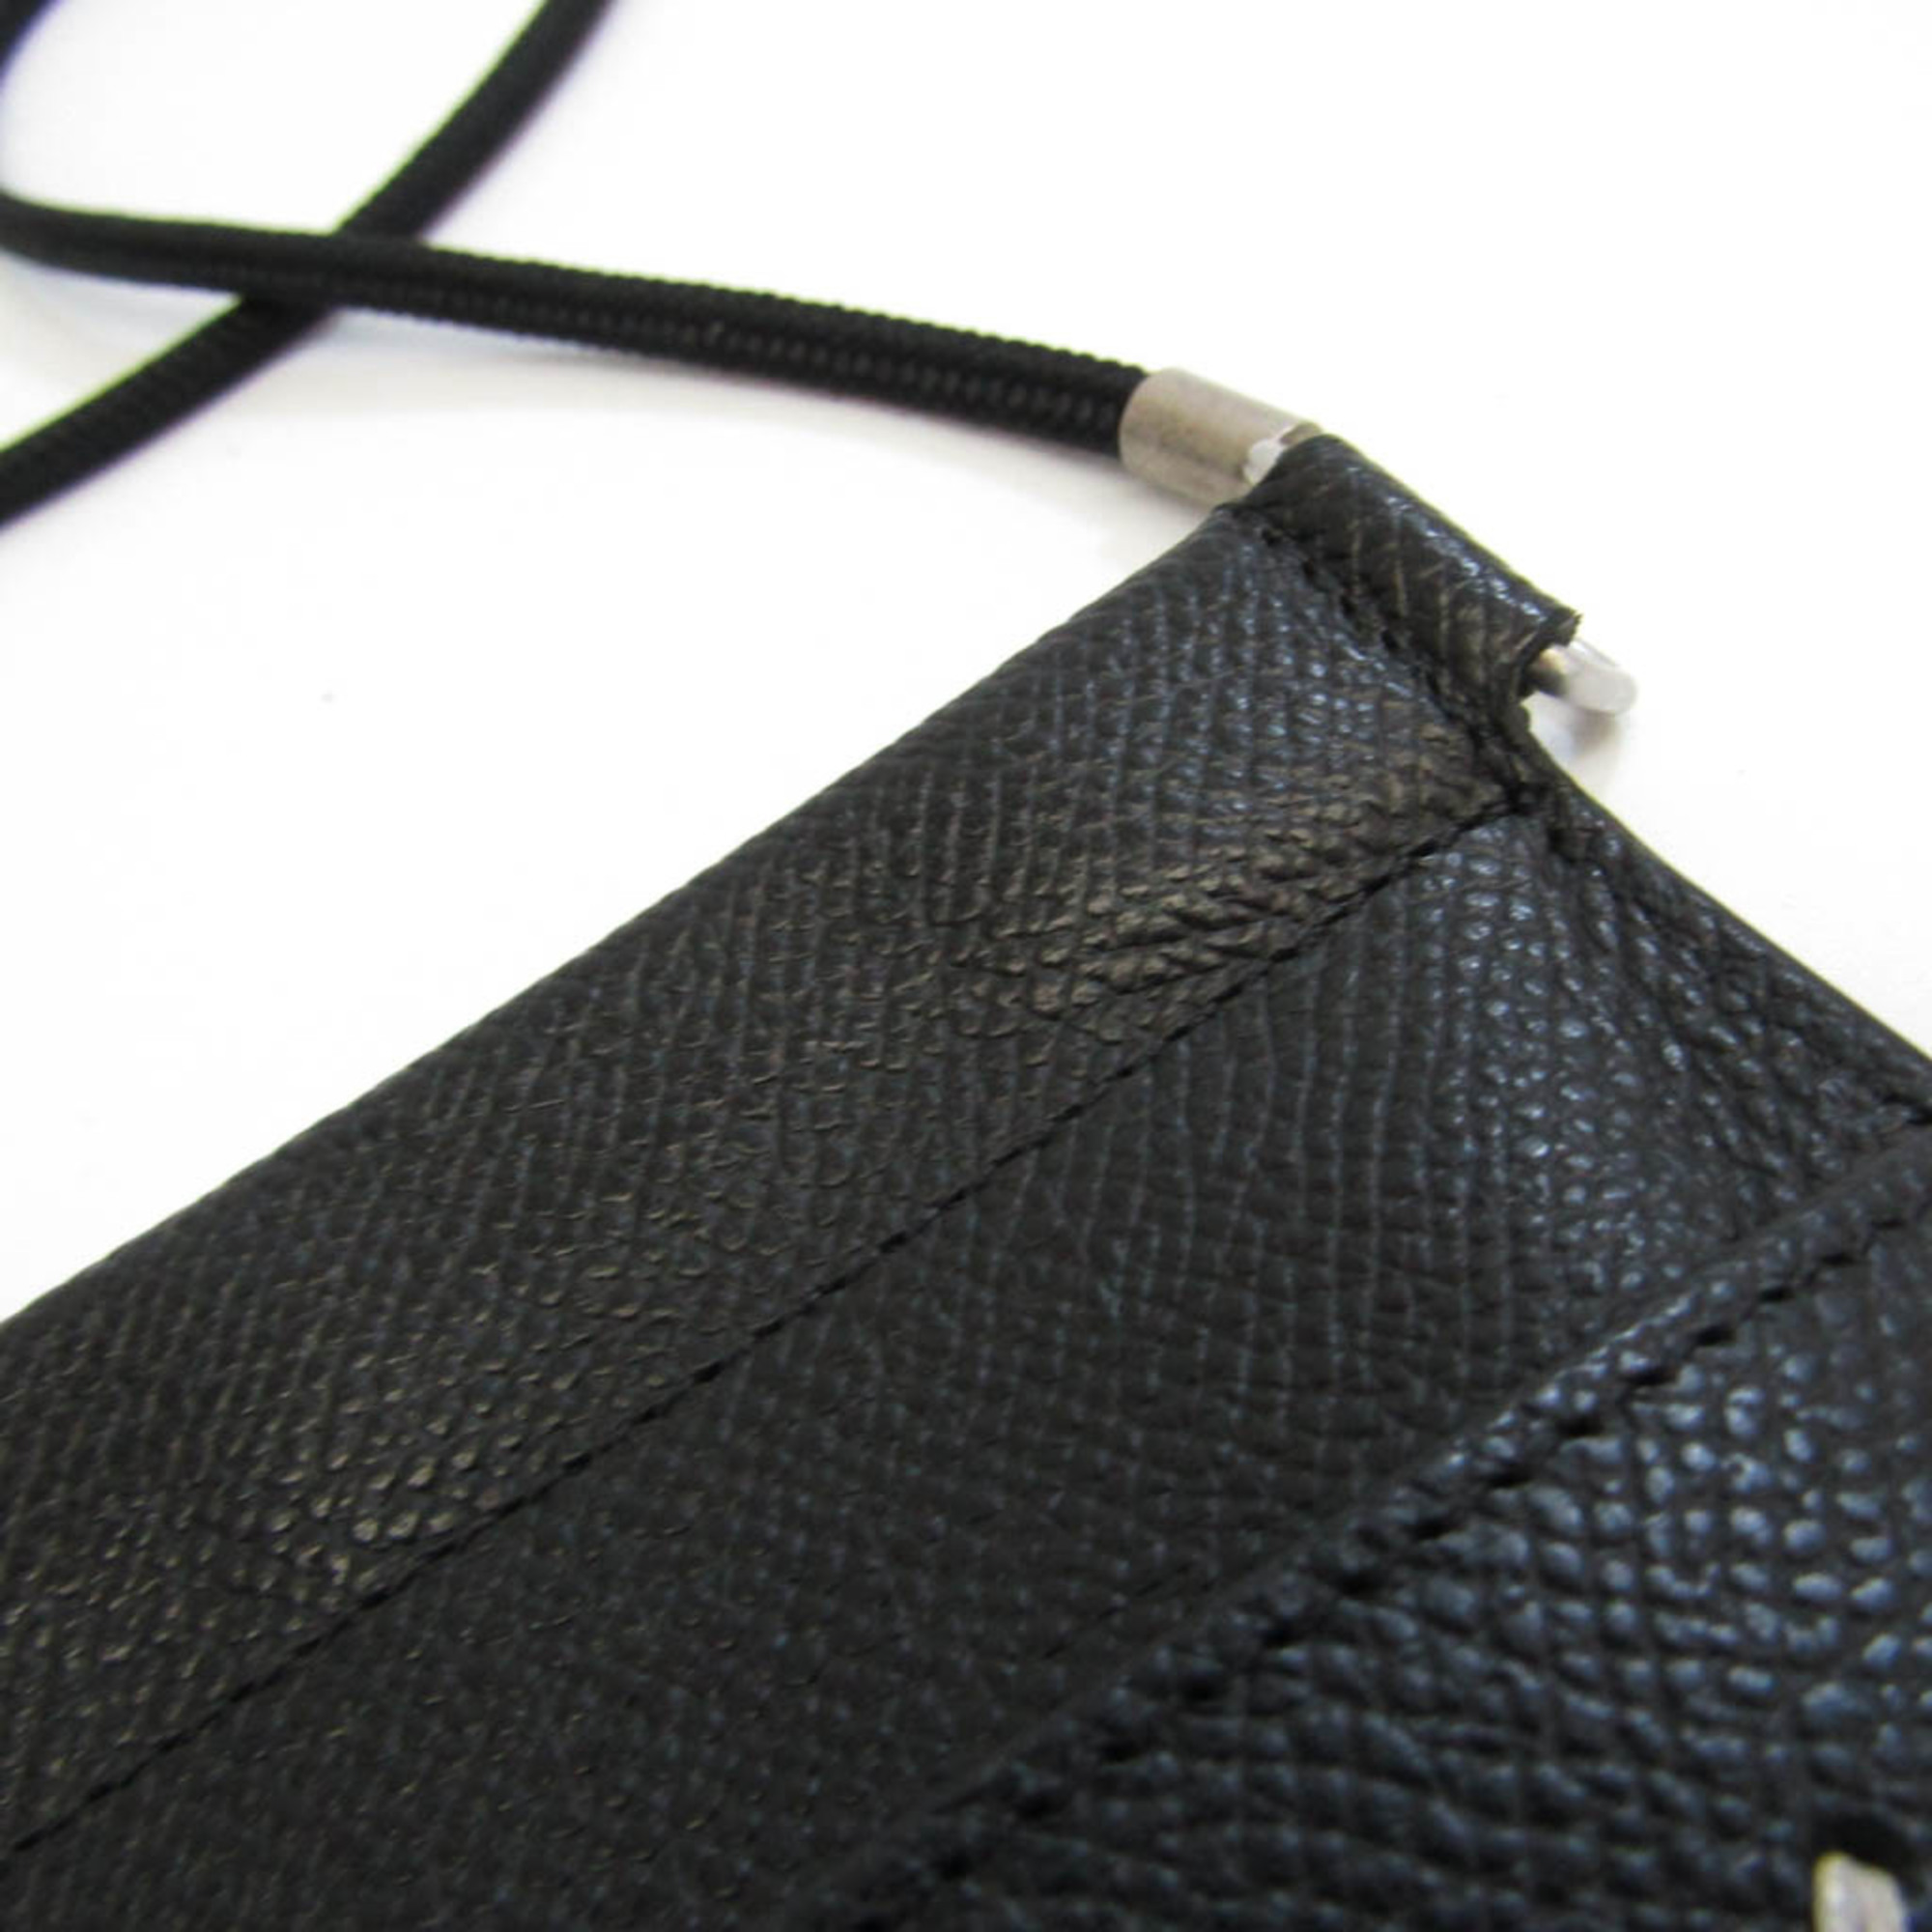 Maison Margiela Document Holder Shoulder Pouch S55UI0207 Women's Leather Shoulder Bag Black